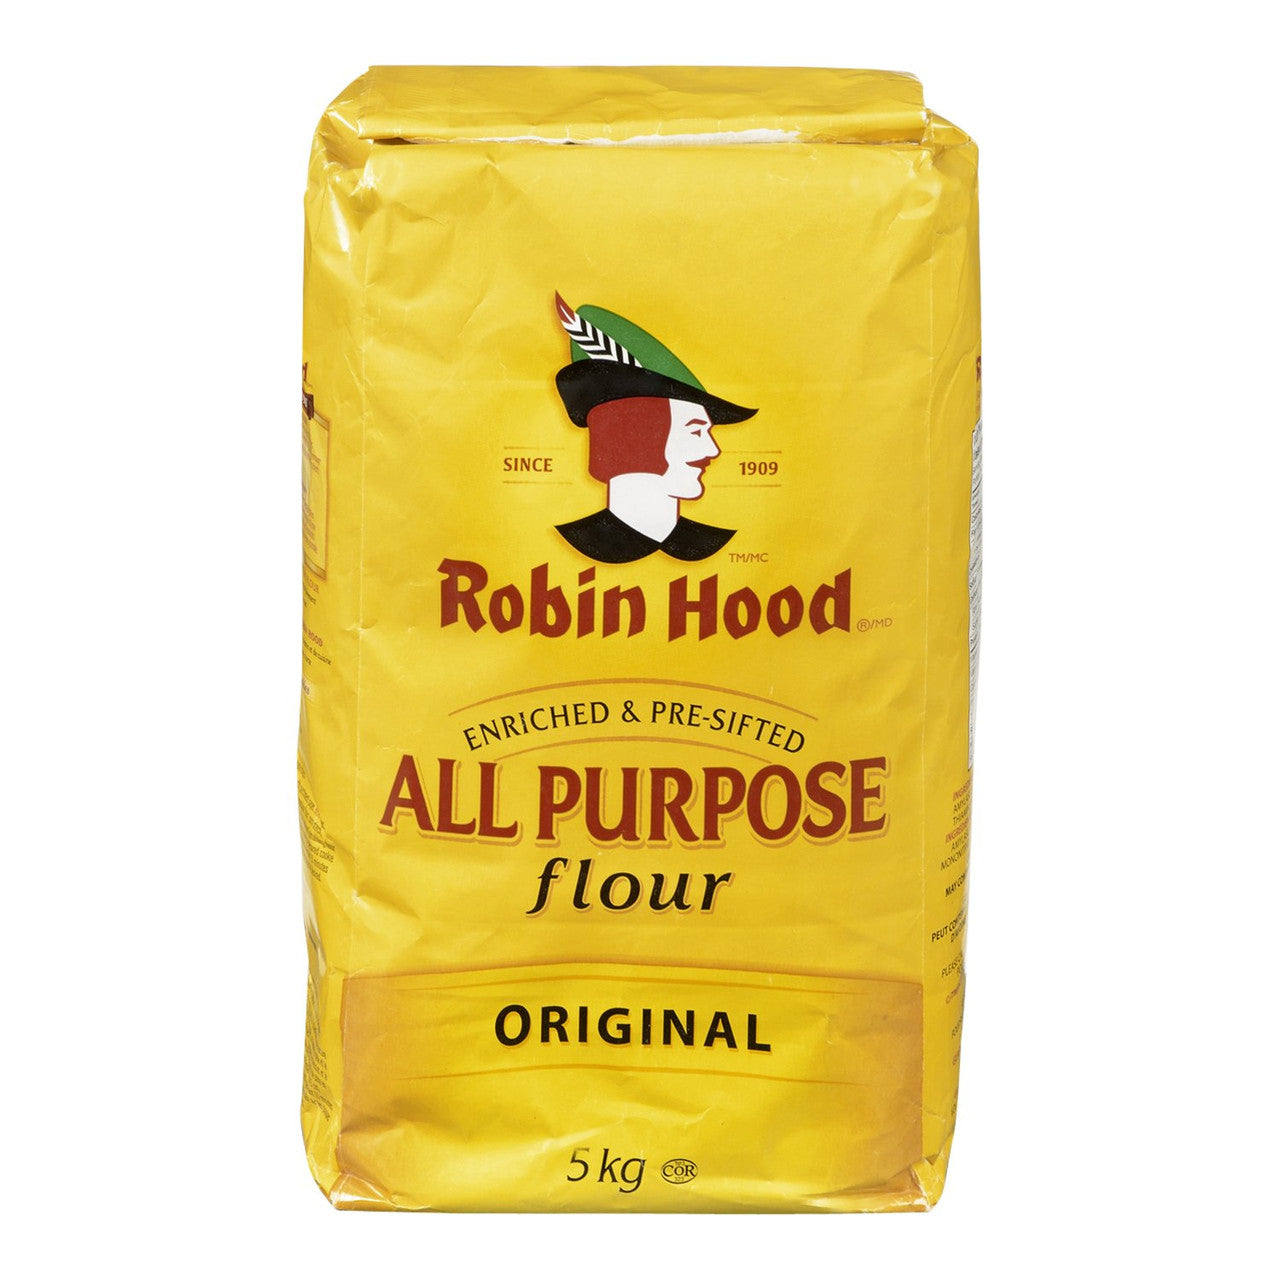 Robin Hood All Purpose Original Flour 5kg bag {Imported from Canada}